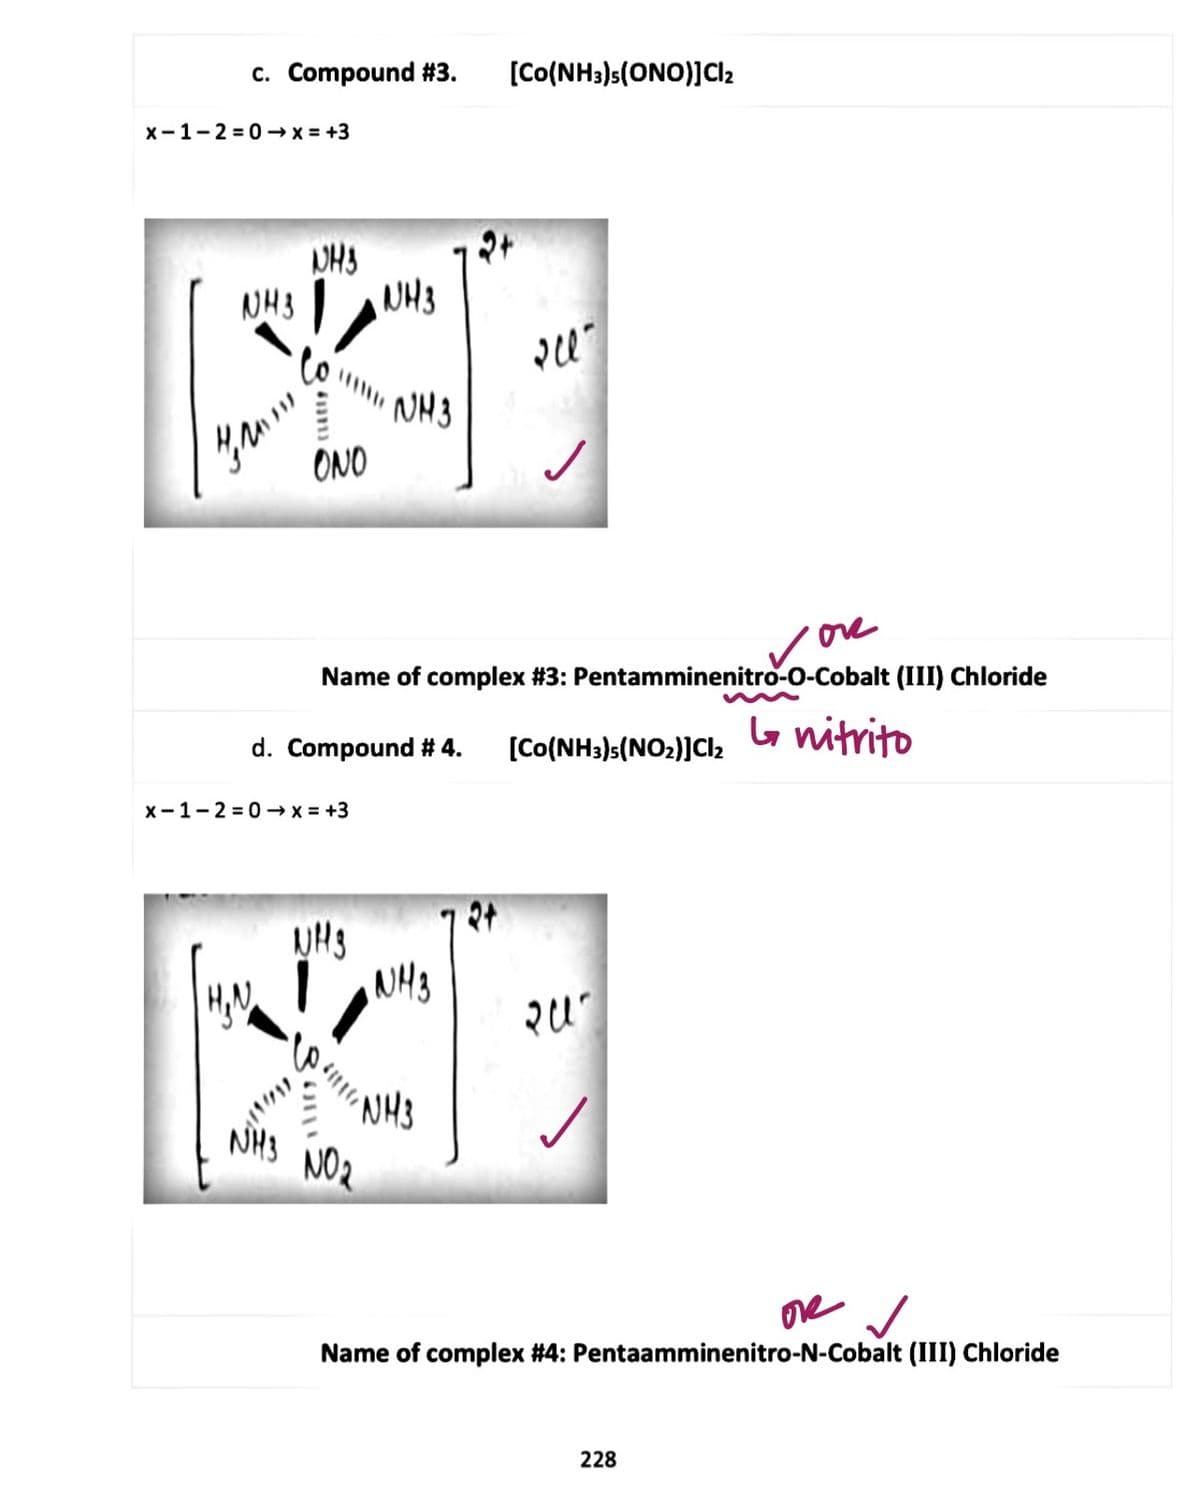 c. Compound #3.
[Co(NH3)s(ONO)]Cl2
x-1-2 = 0-x = +3
NH3
NH3
NH3
NH 3
ONO
vove
Name of complex #3: Pentamminenitro-O-Cobalt (III) Chloride
G nitrito
d. Compound # 4.
[Co(NH3)s(NO2)]Cl2
x-1-2 = 0 -→ x = +3
NH3
NH3
NH3 NO2
one /
Name of complex #4: Pentaamminenitro-N-Cobalt (III) Chloride
228
ג1ונו4
